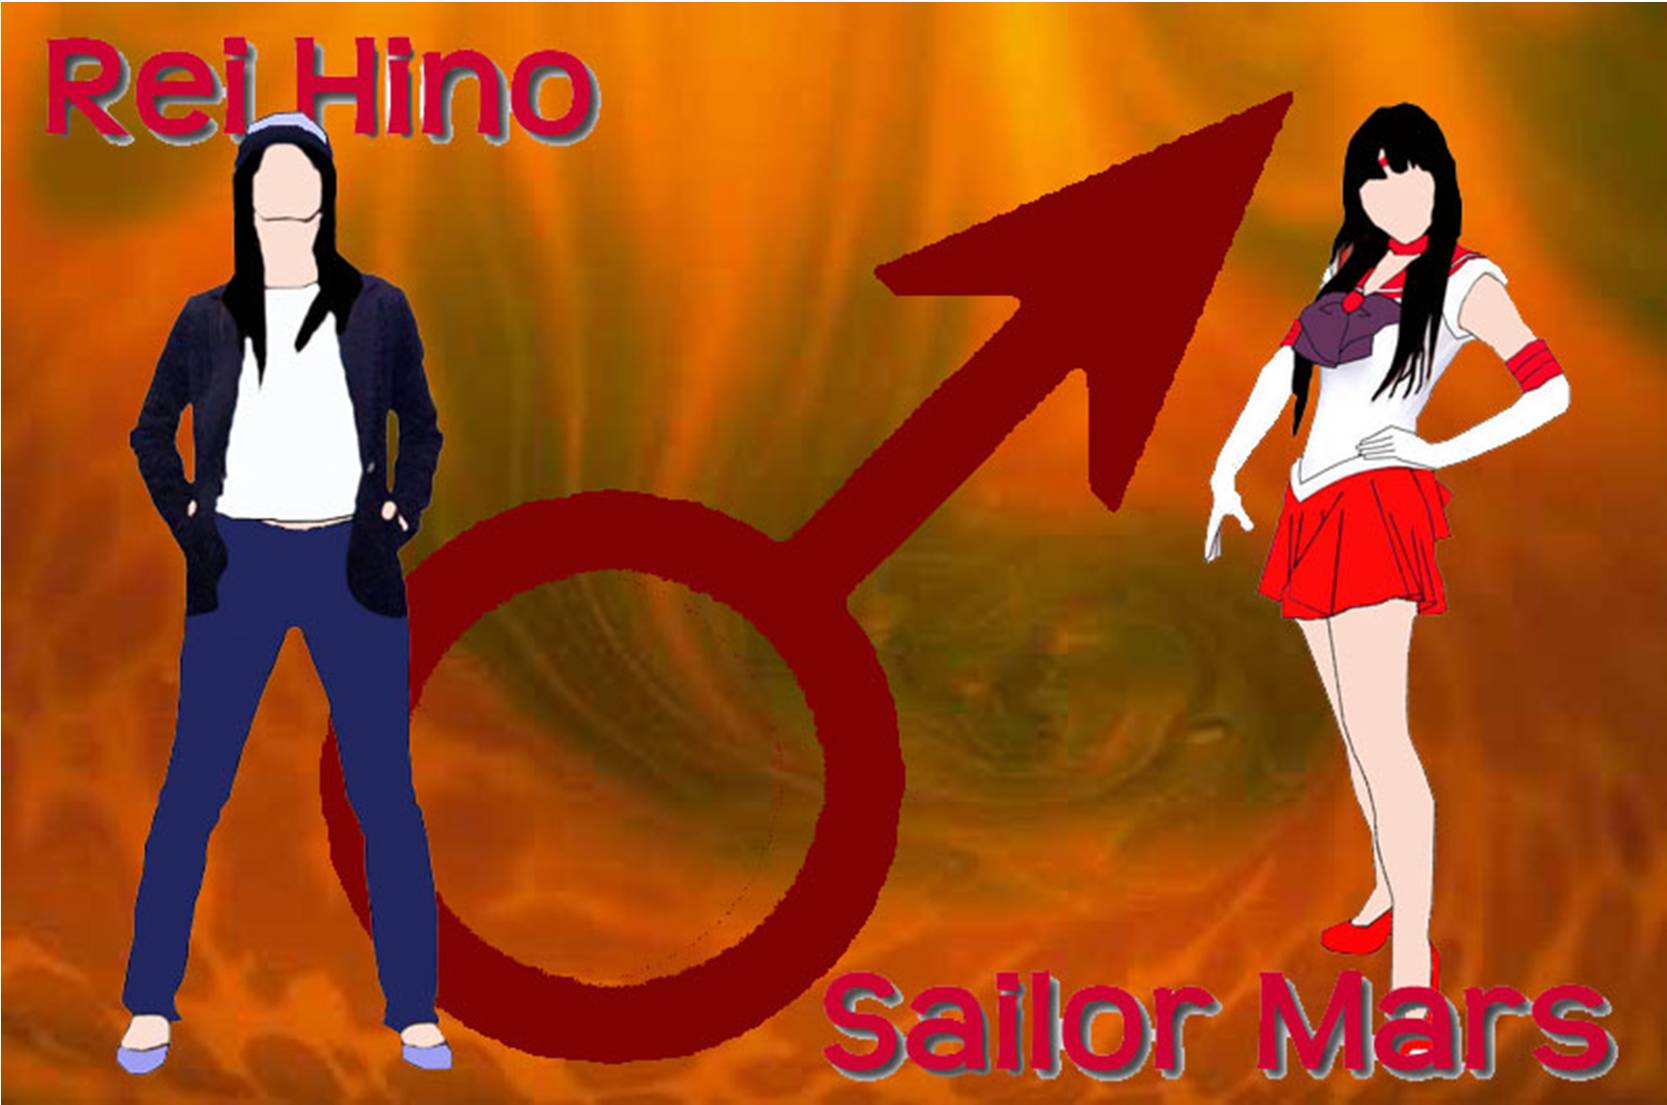 Rei Hino/ Sailor Mars by Art